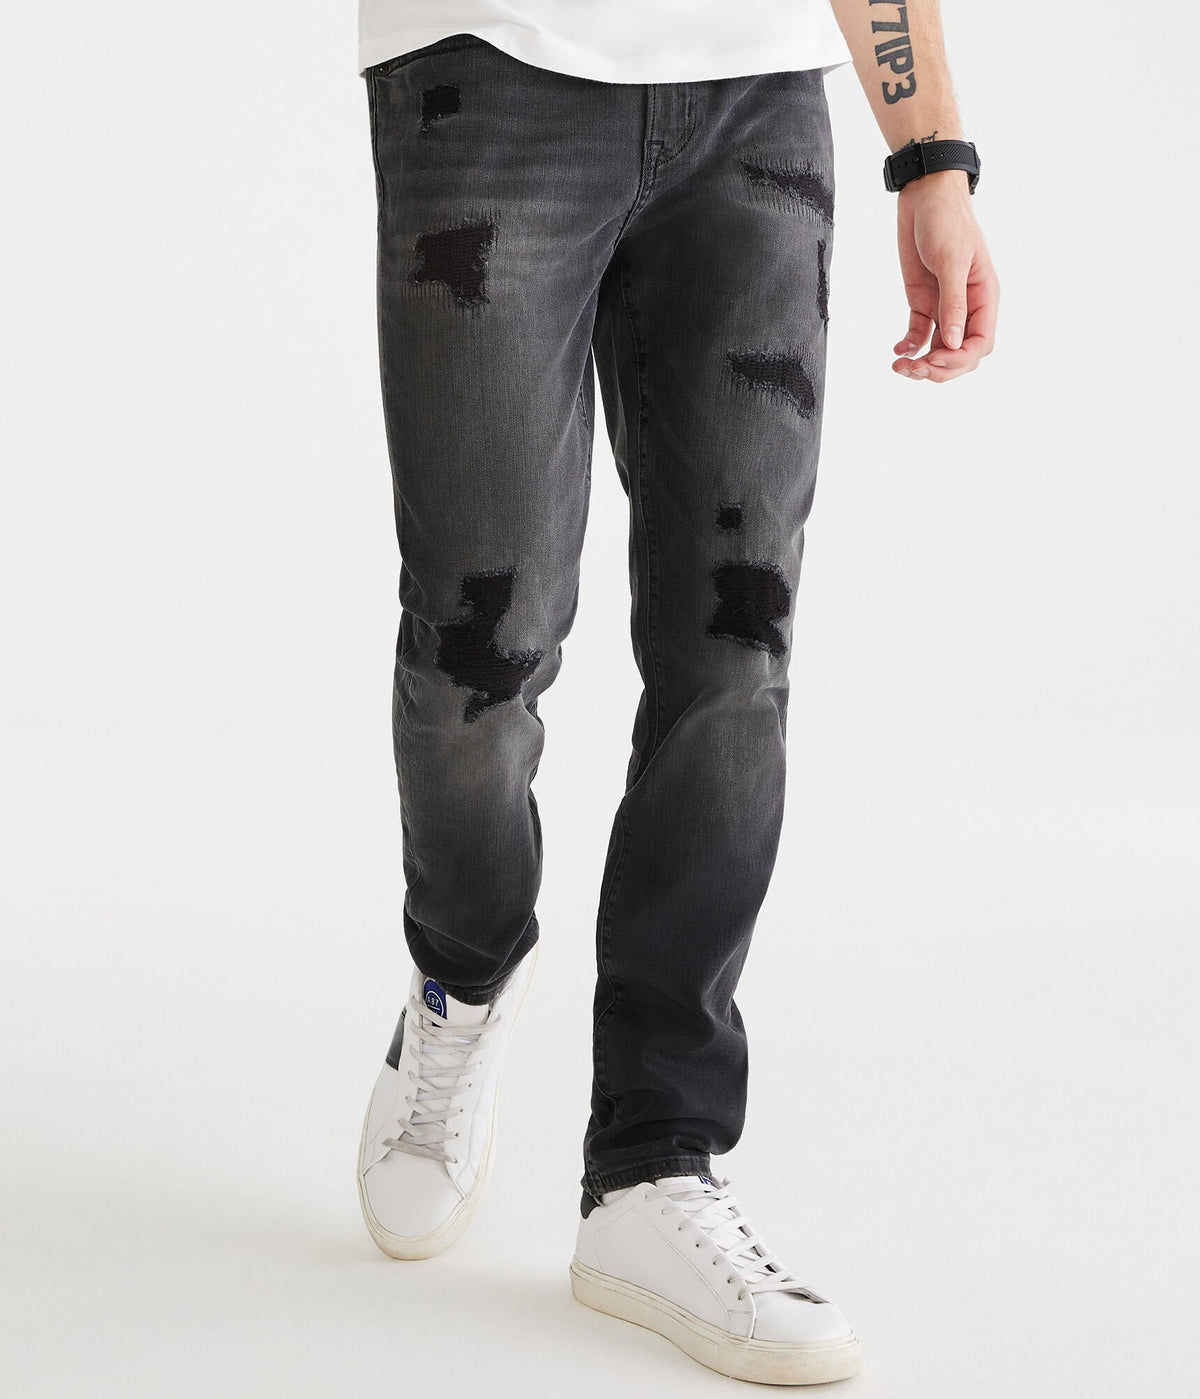 Aeropostale Mens' Skinny Premium Jean With LYCRA FREEF!T Technology -  - Size 38X32 - Cotton - Teen Fashion & Clothing Black